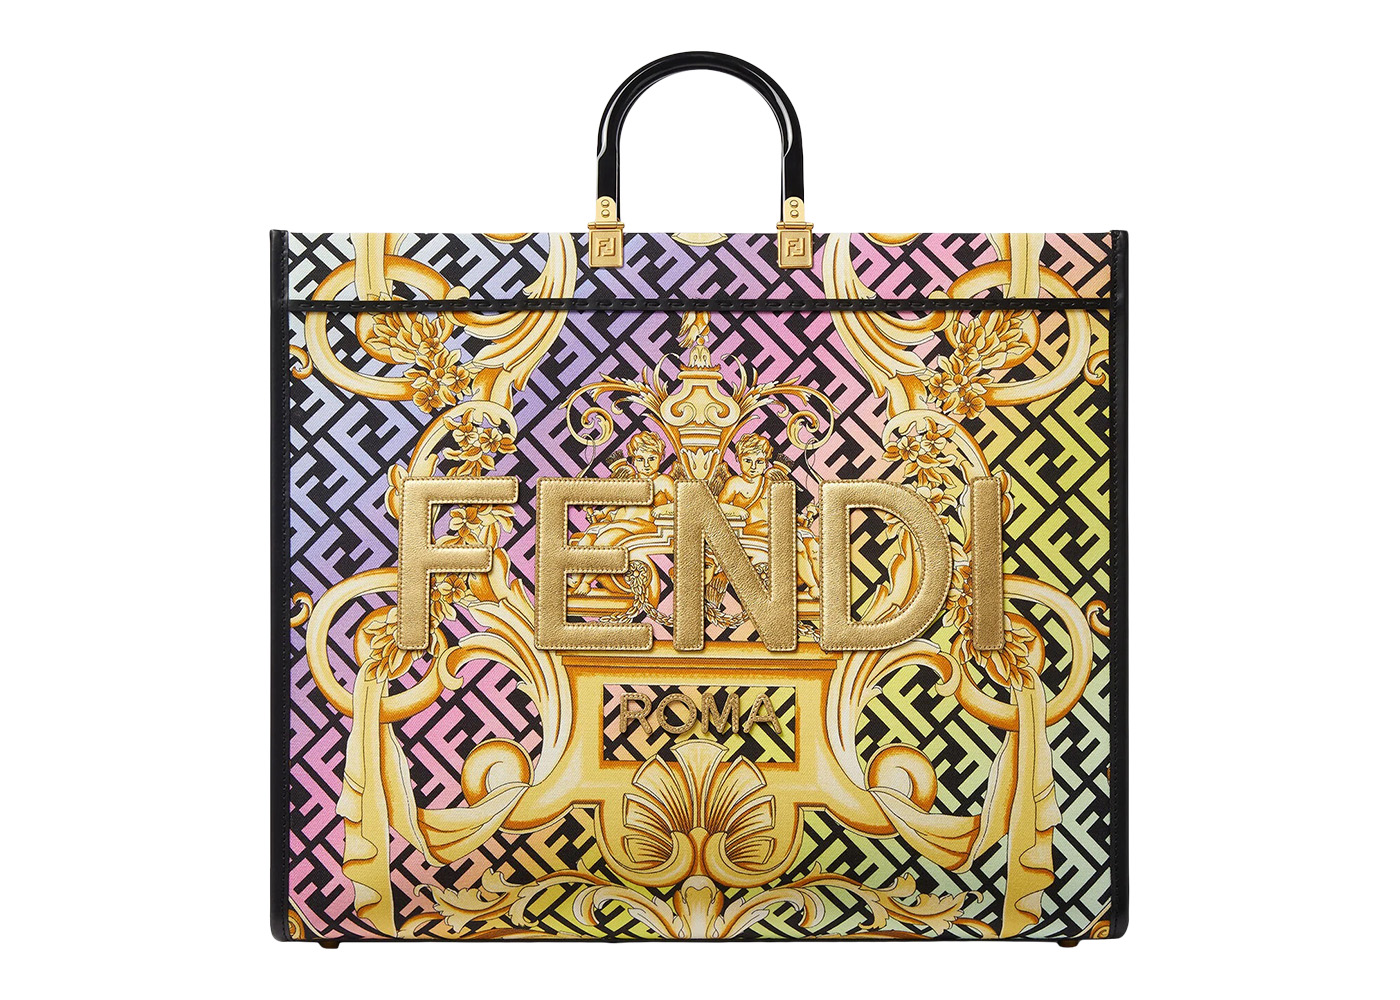 Fendi Fendace Sunshine Large Tote Bag Gold Baroque Print in Cotton